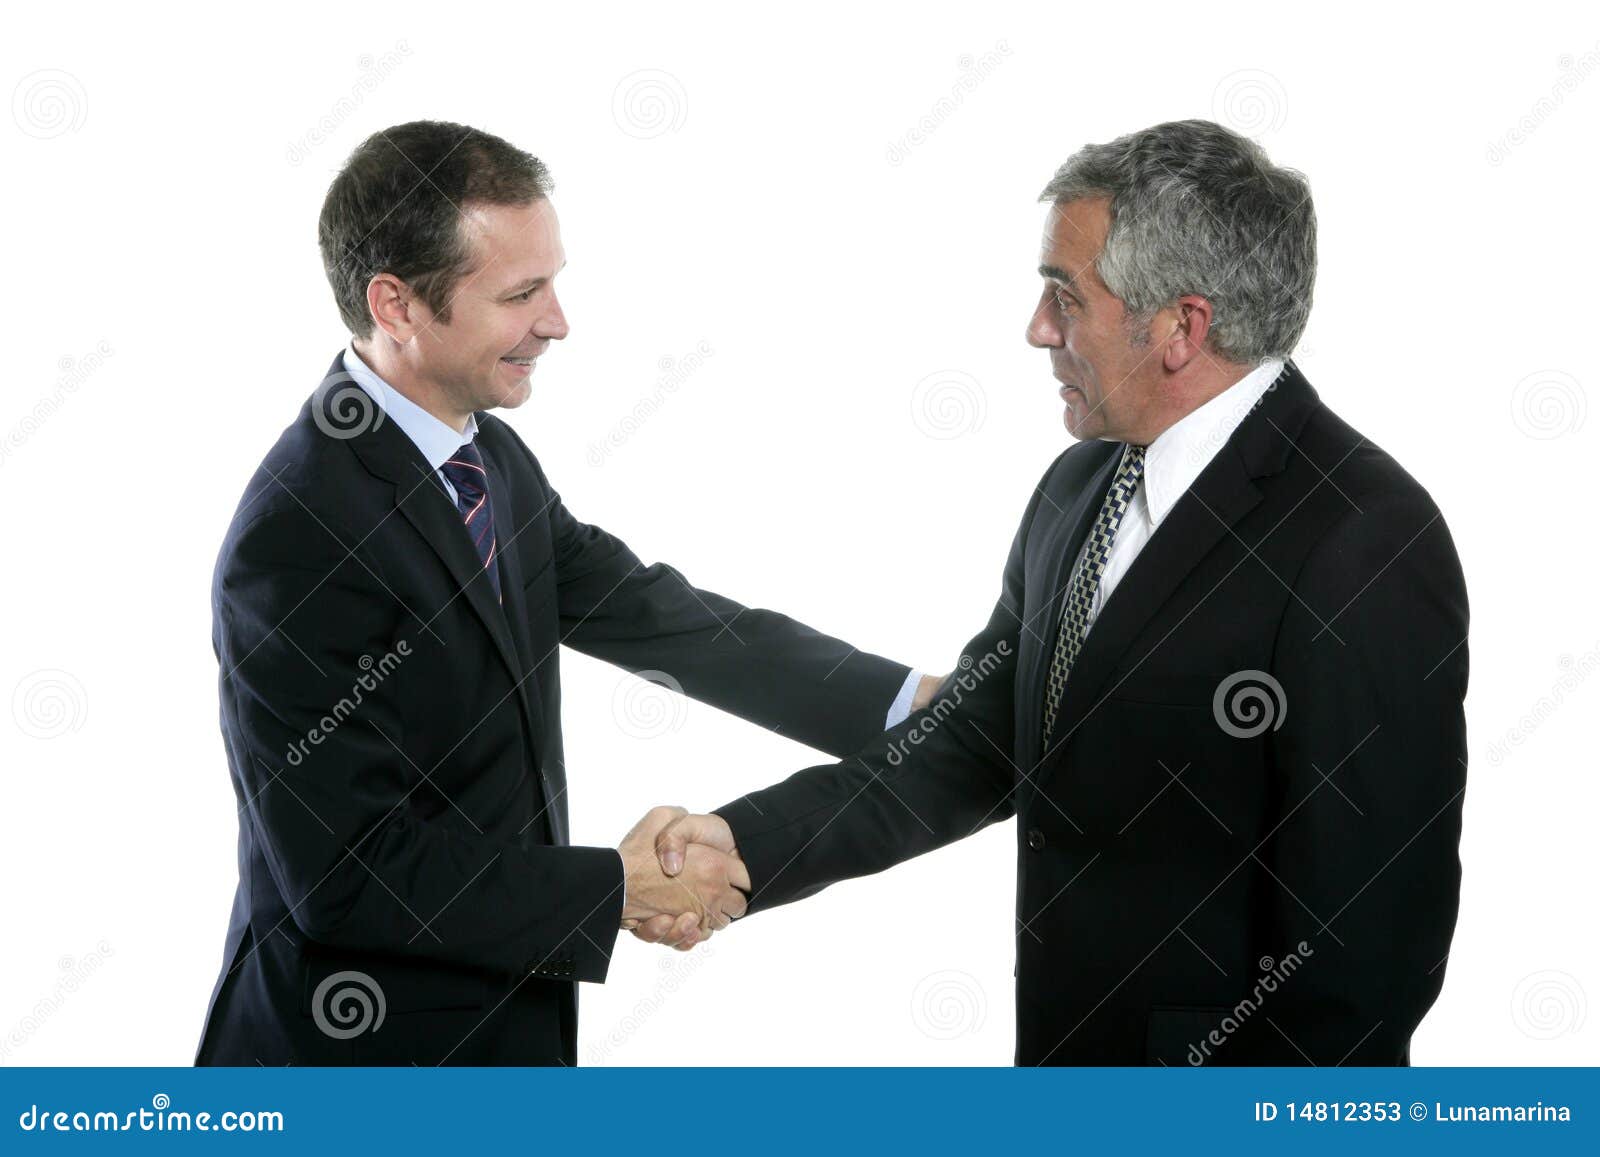 adult businessman handshake expertise portrait